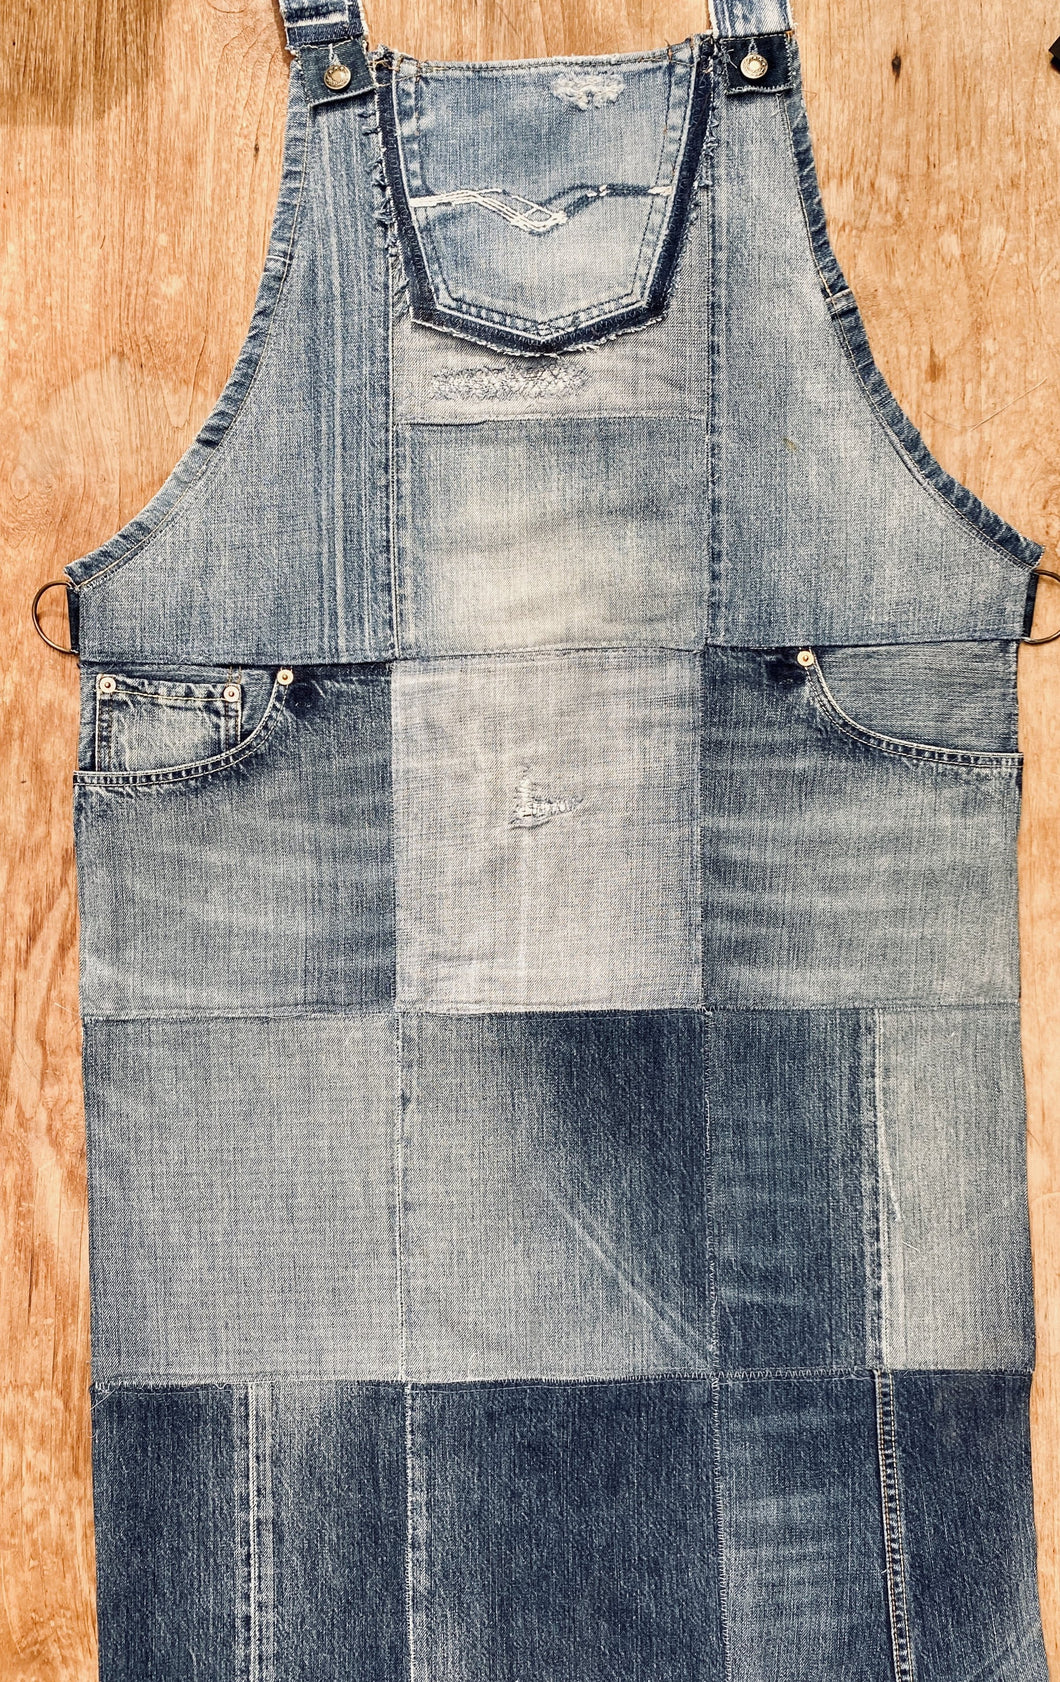 Unique Piece Denim Apron with recycled Diesel jeans